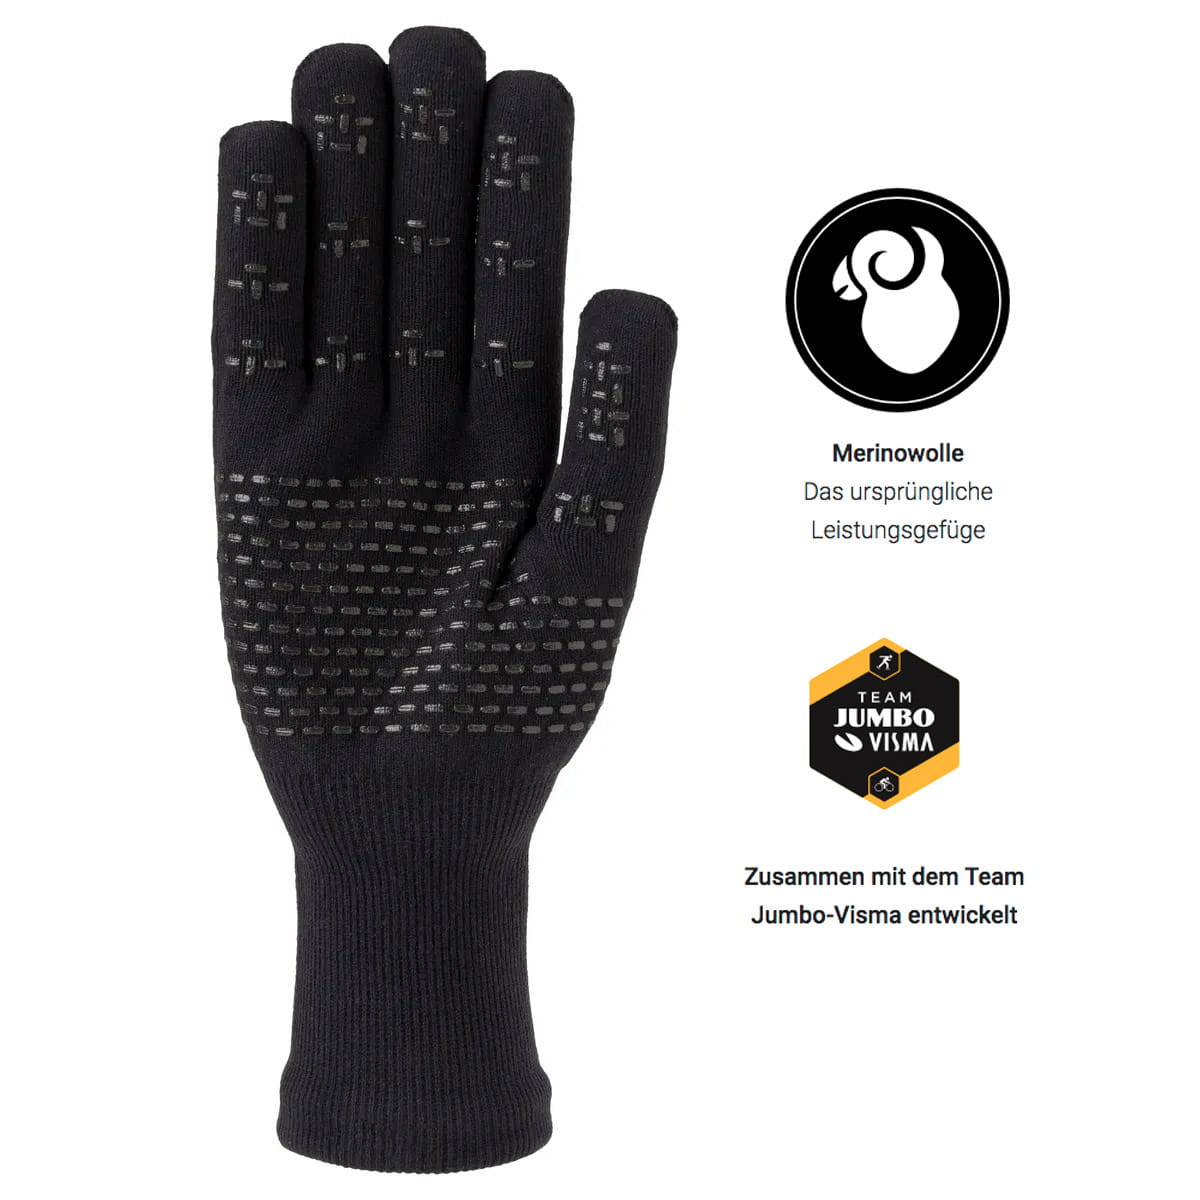 AGU Merino Knit Gloves Waterproof